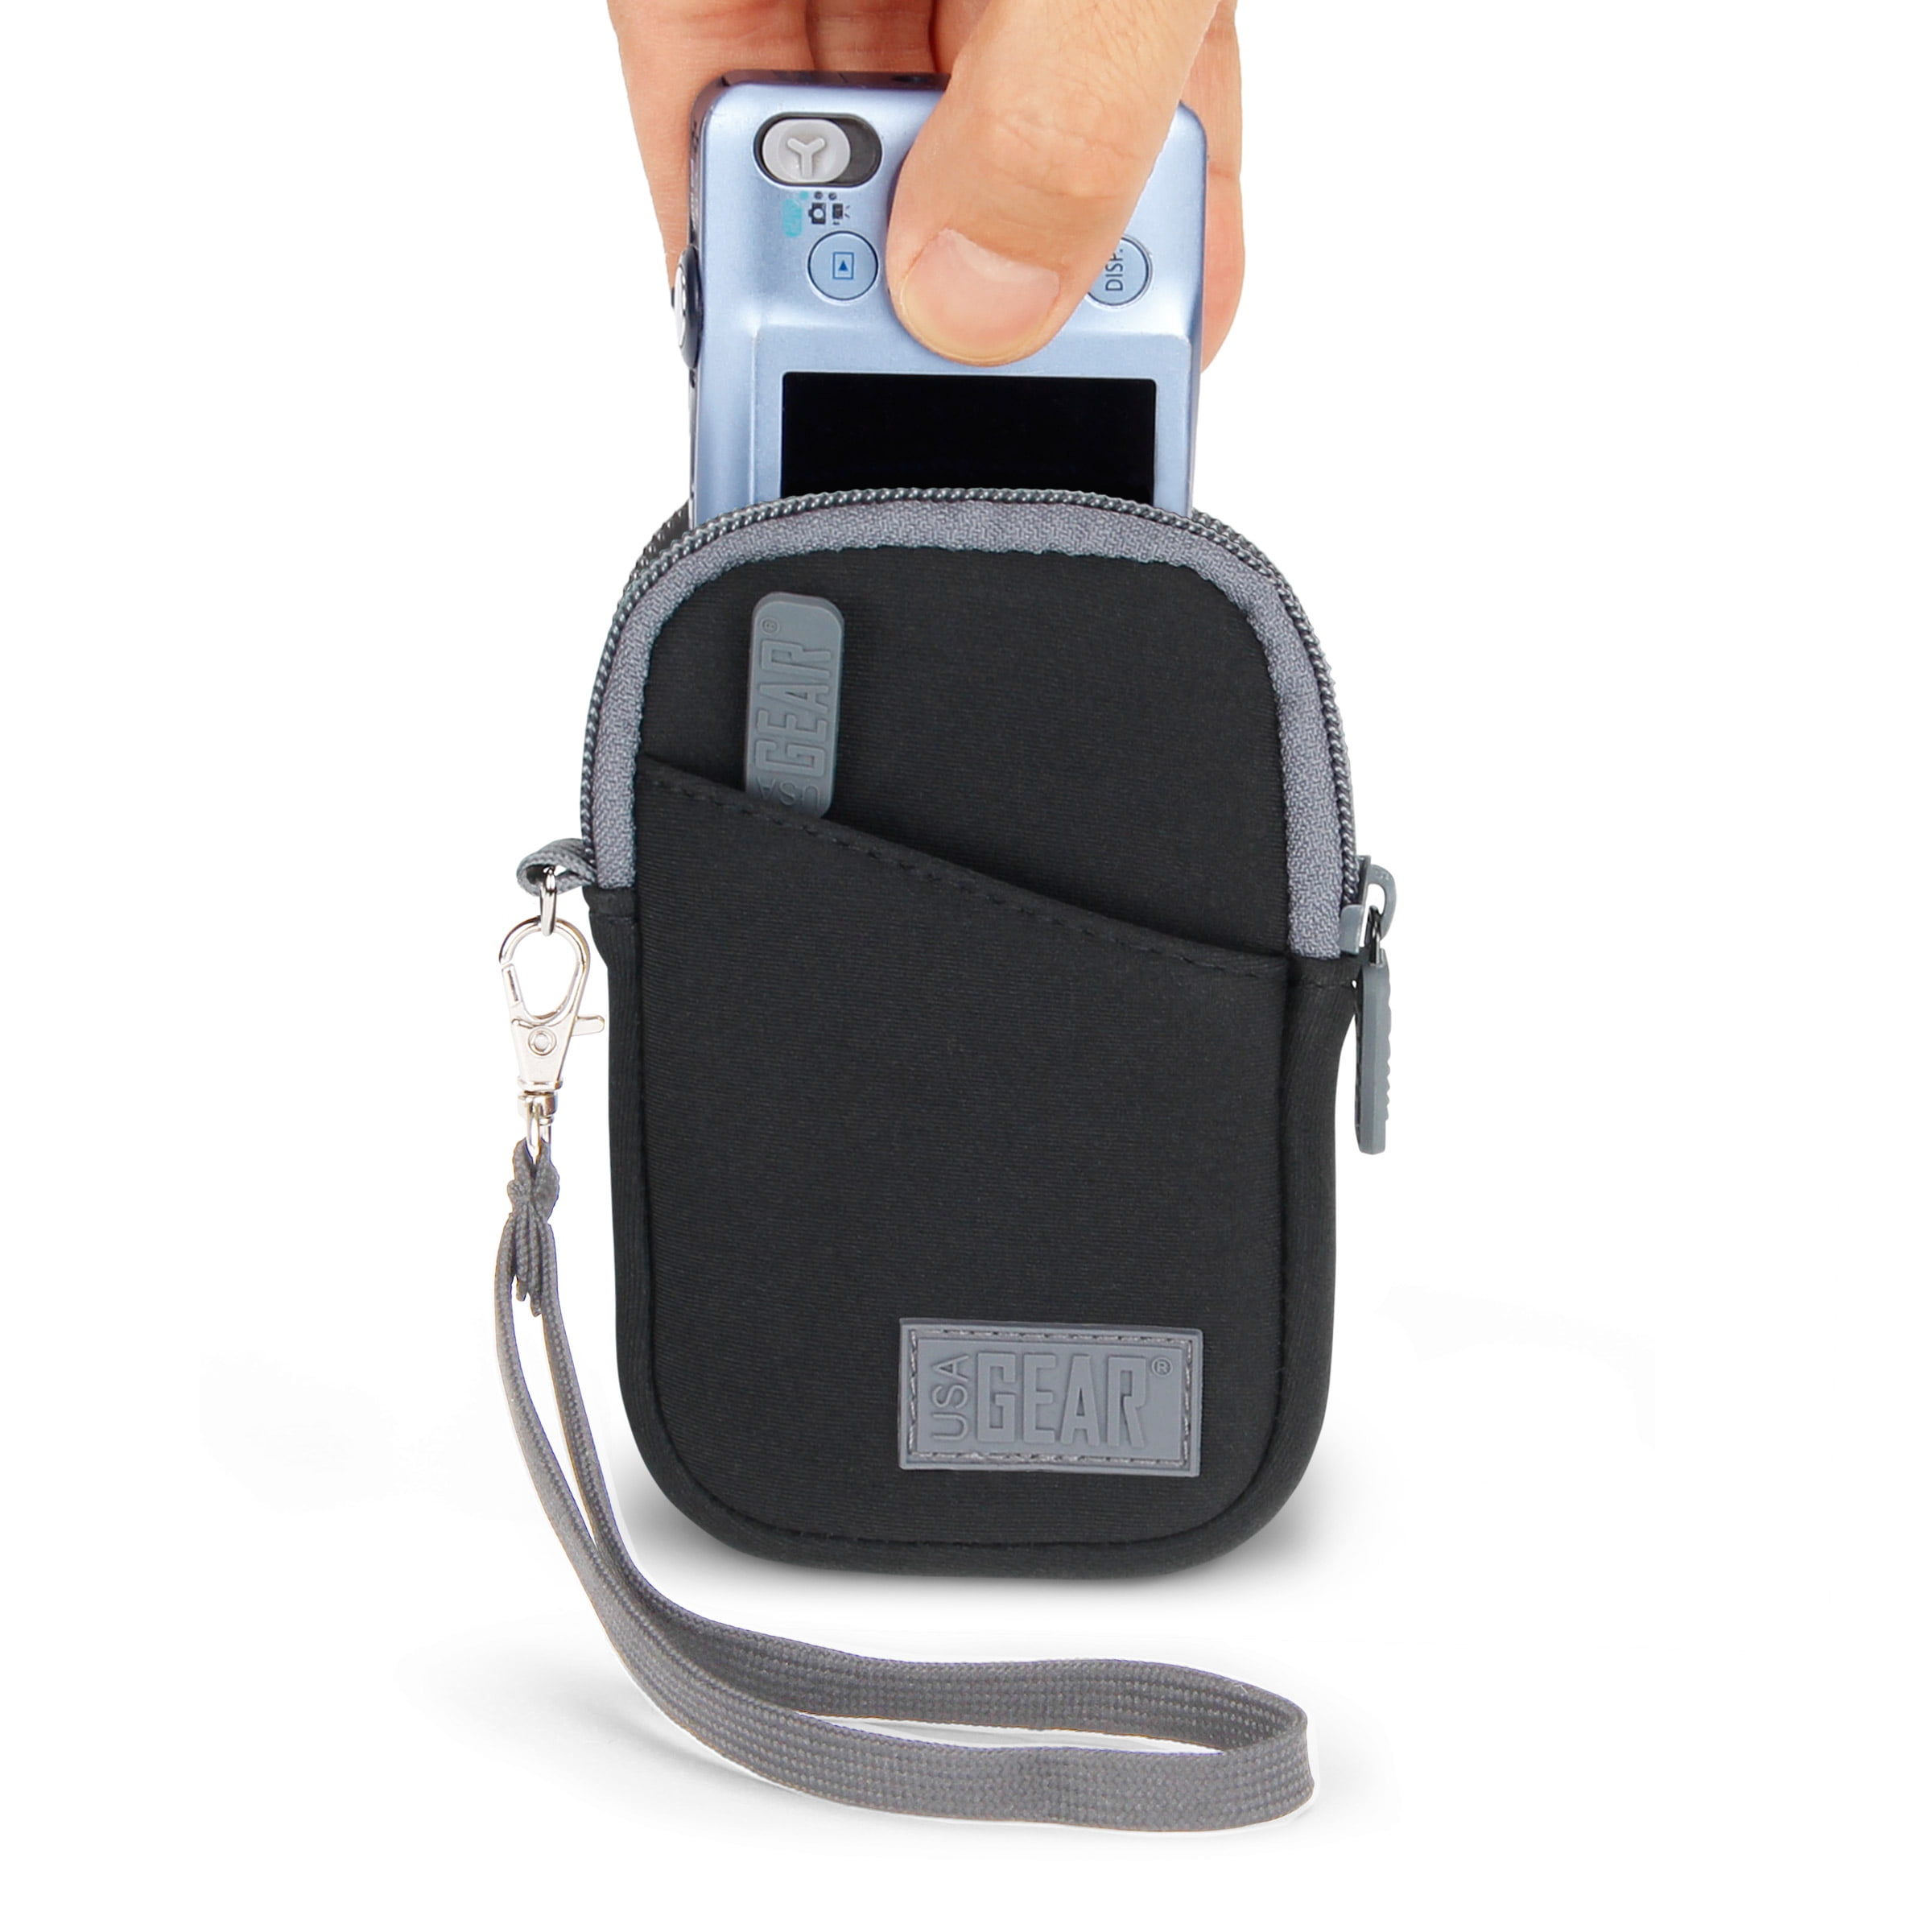 USA GEAR Small Digital Camera Case with Wrist Strap, Belt Loop ...